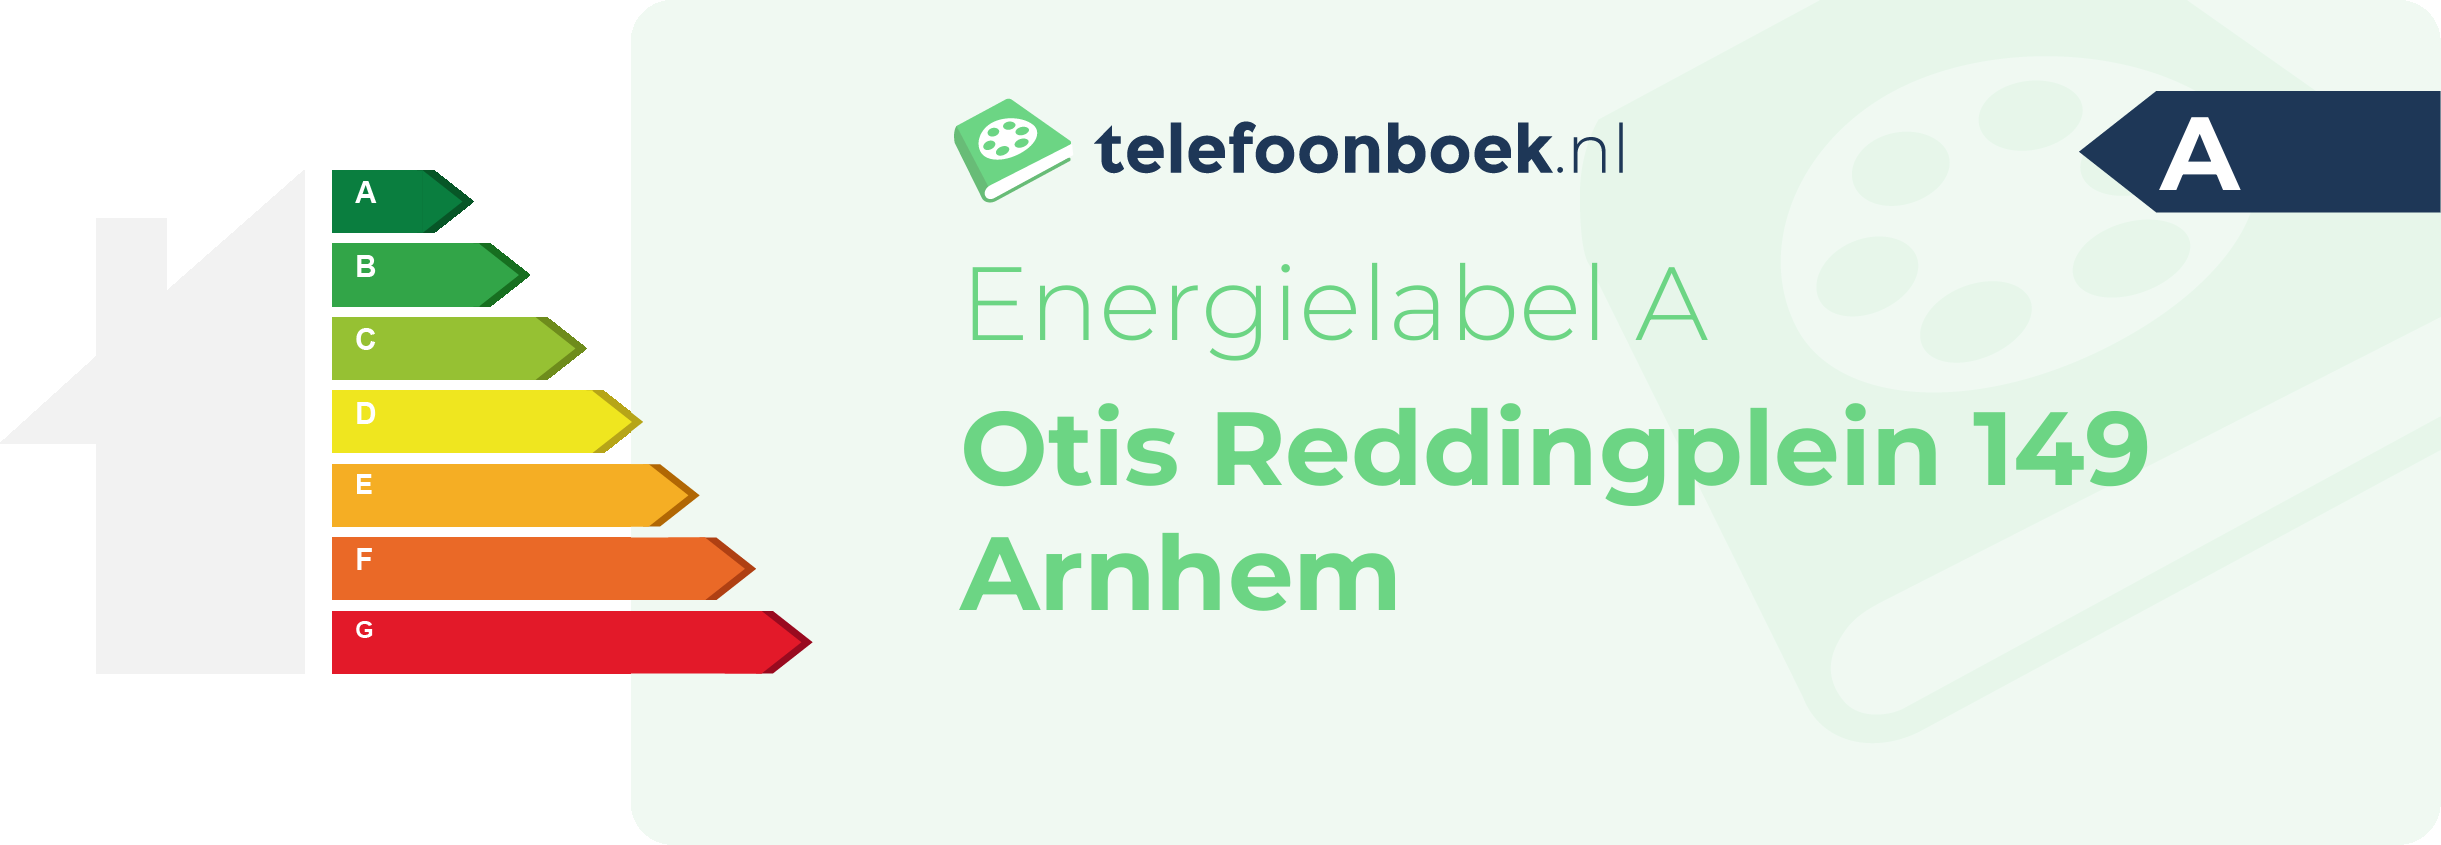 Energielabel Otis Reddingplein 149 Arnhem